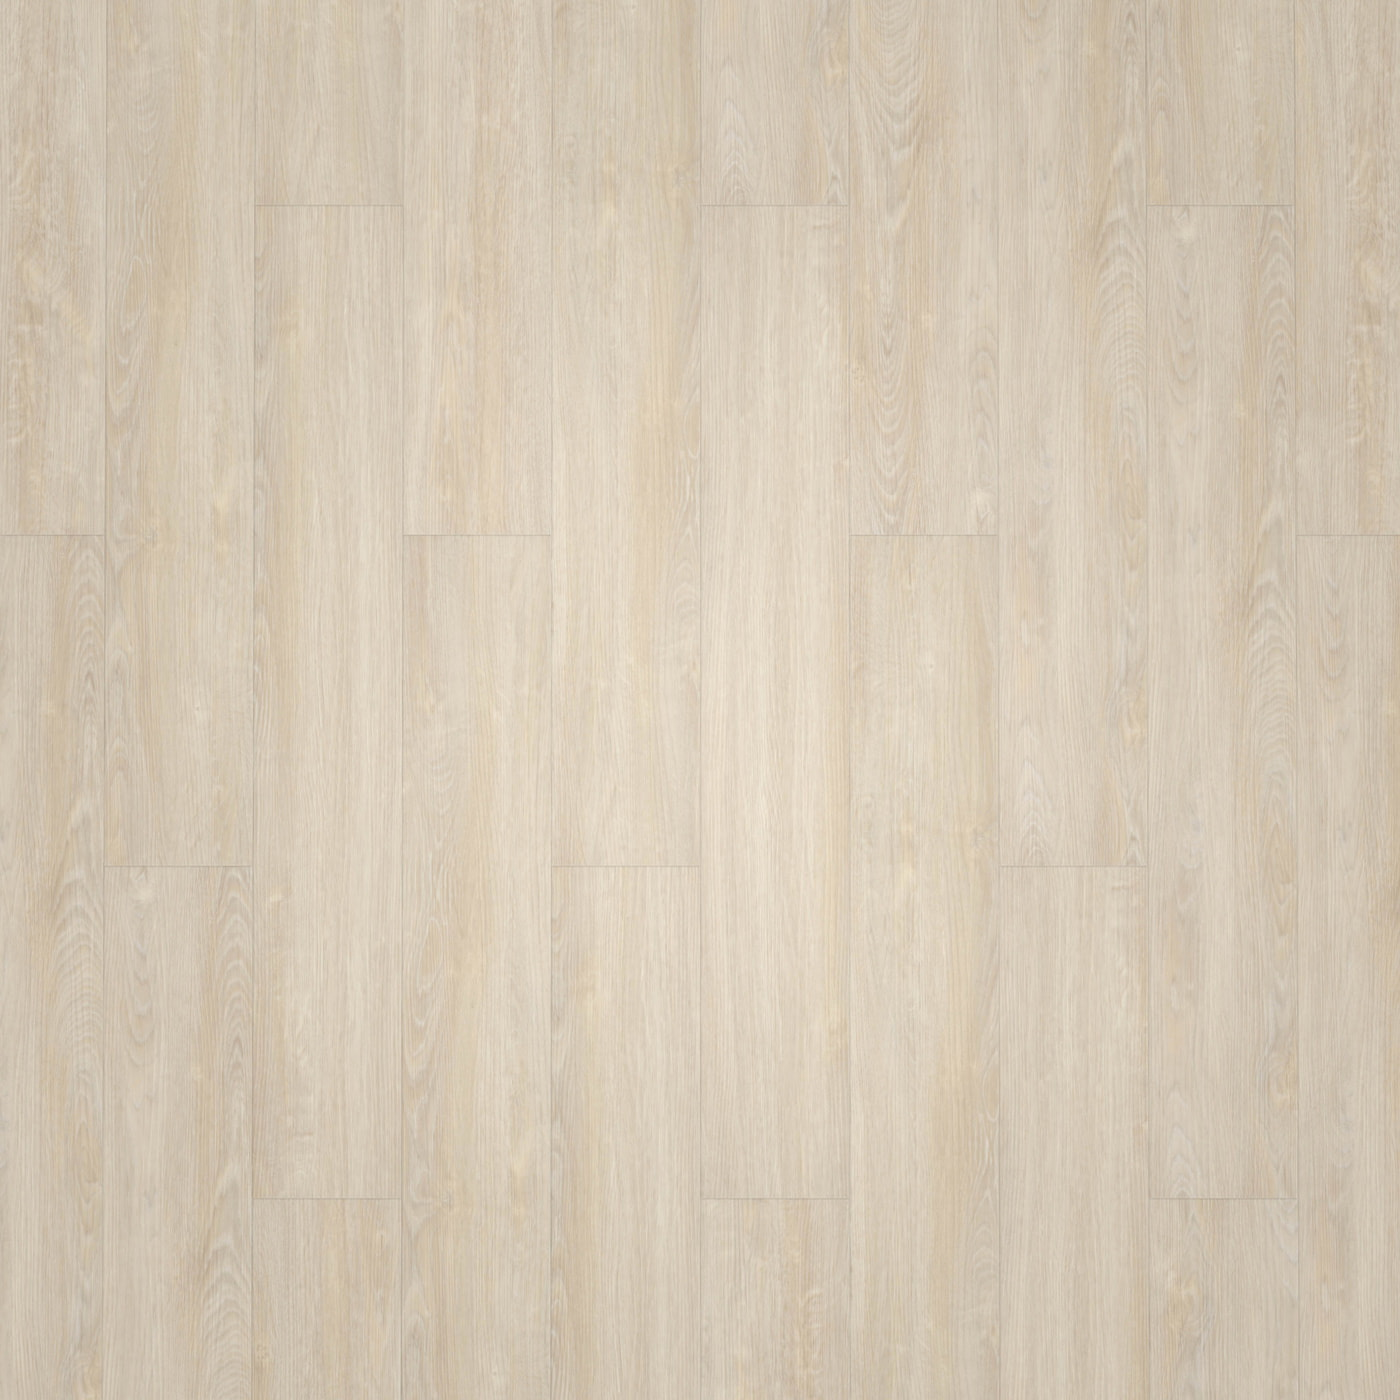 wineo Klebe-Vinyl wineo 800 wood Salt Lake Oak Exklusive Holzstruktur